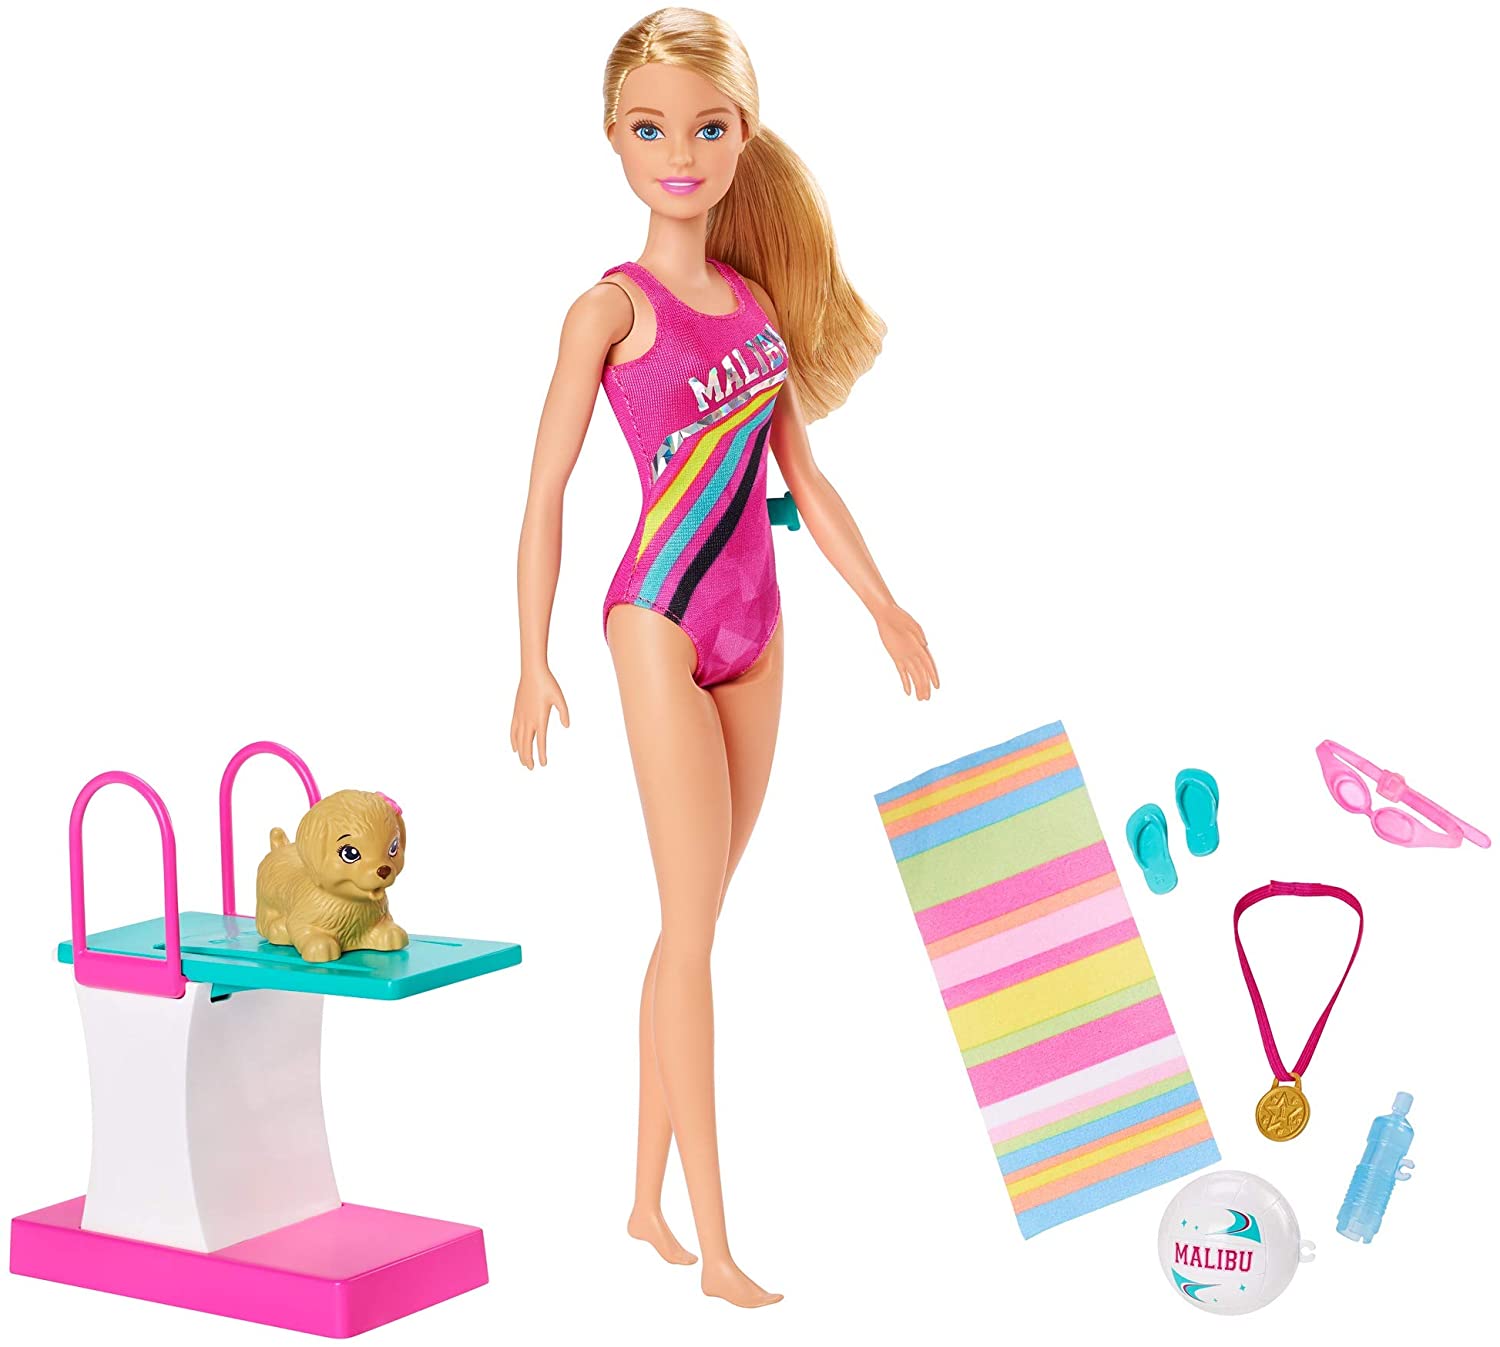 Barbie Swim 'n Dive Doll - Swimwear, Swimming Feature, Diving Board, Puppy $9.99 at Amazon